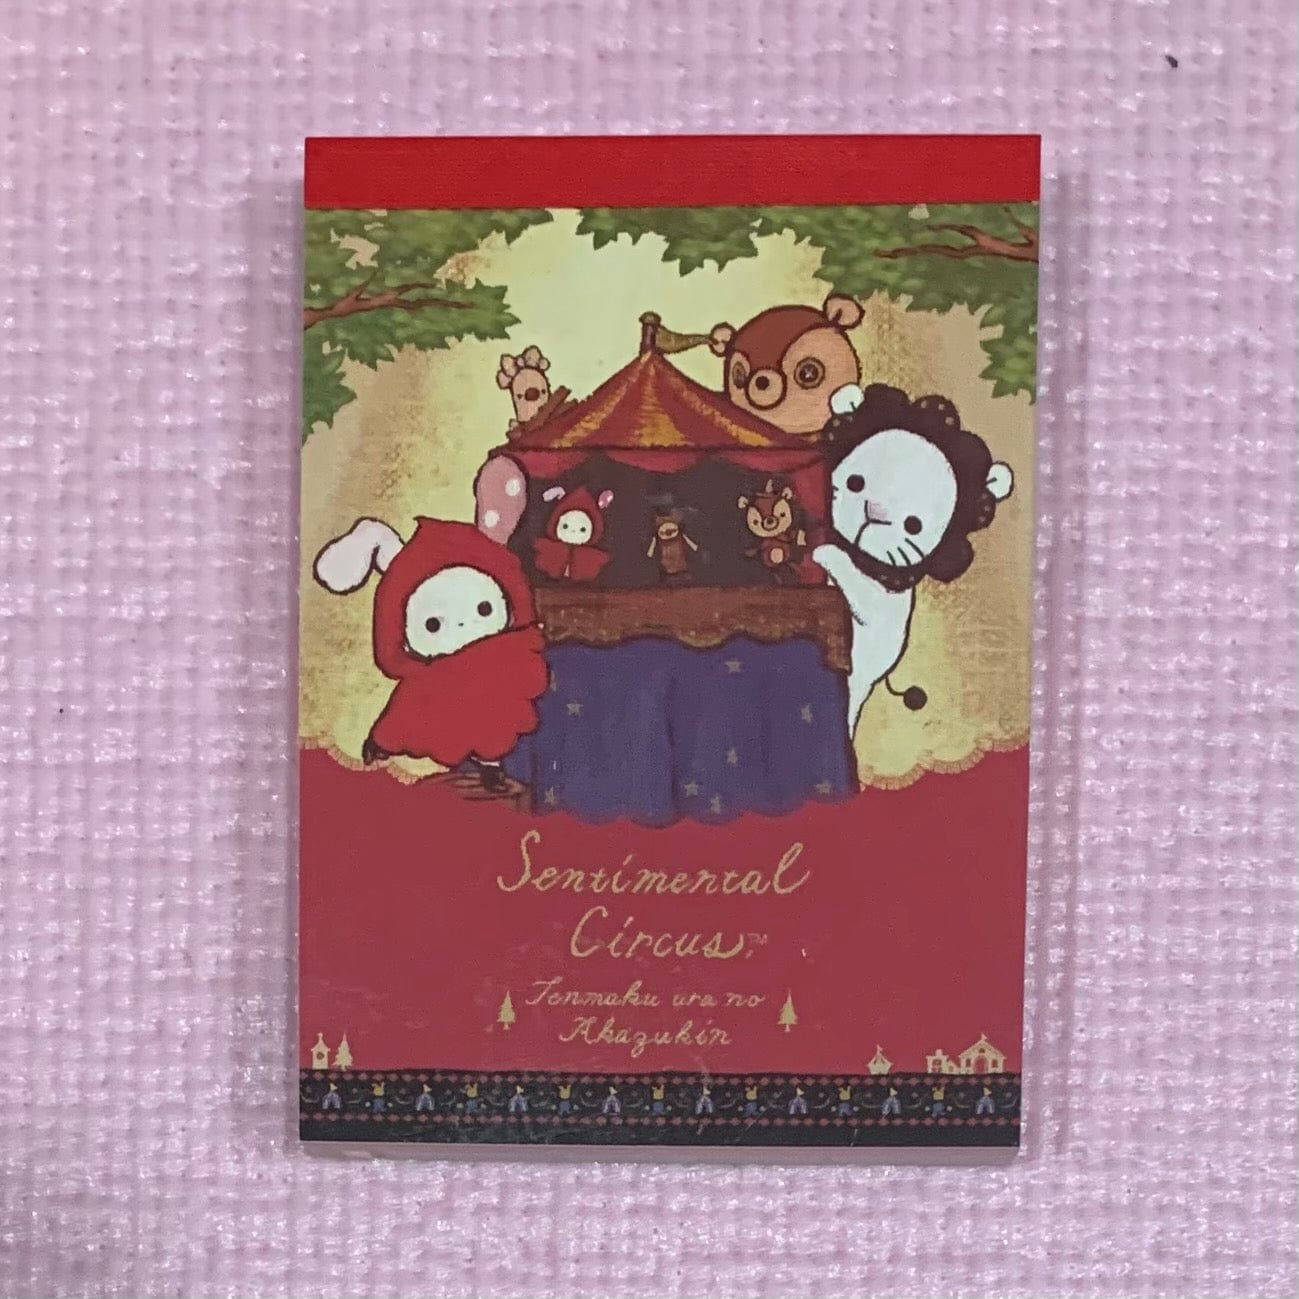 Kawaii Import San-X Sentimental Circus Small Memo Pad: Little Red Riding Hood (C) Kawaii Gifts 4974413627955